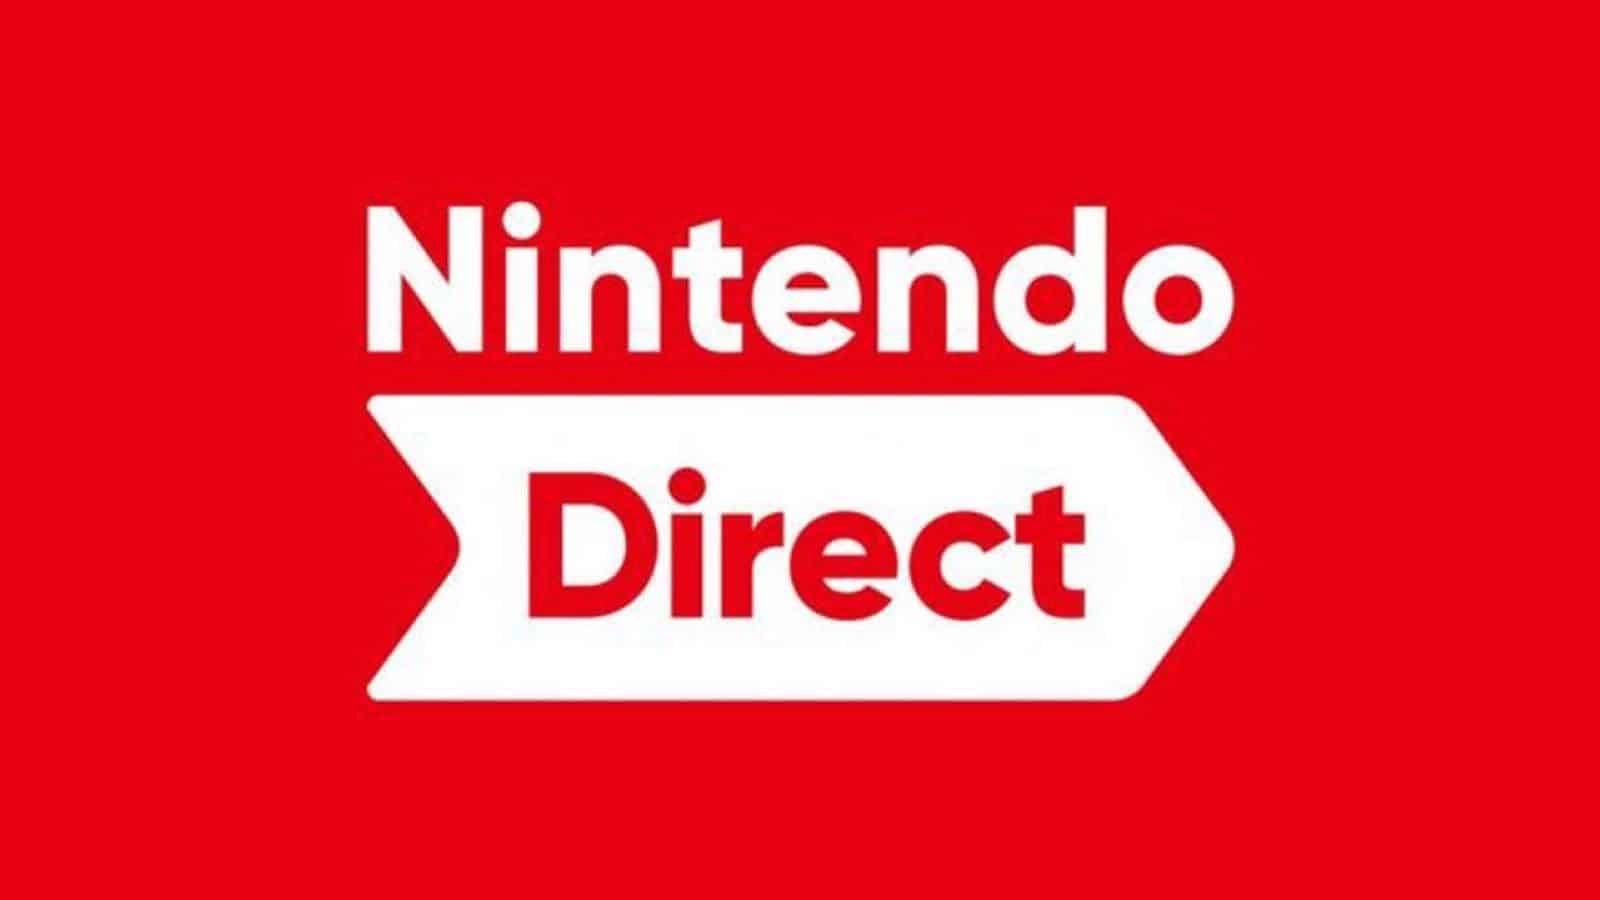 Nintendo Direct Partner Showcase Coming Next Week, It's Claimed